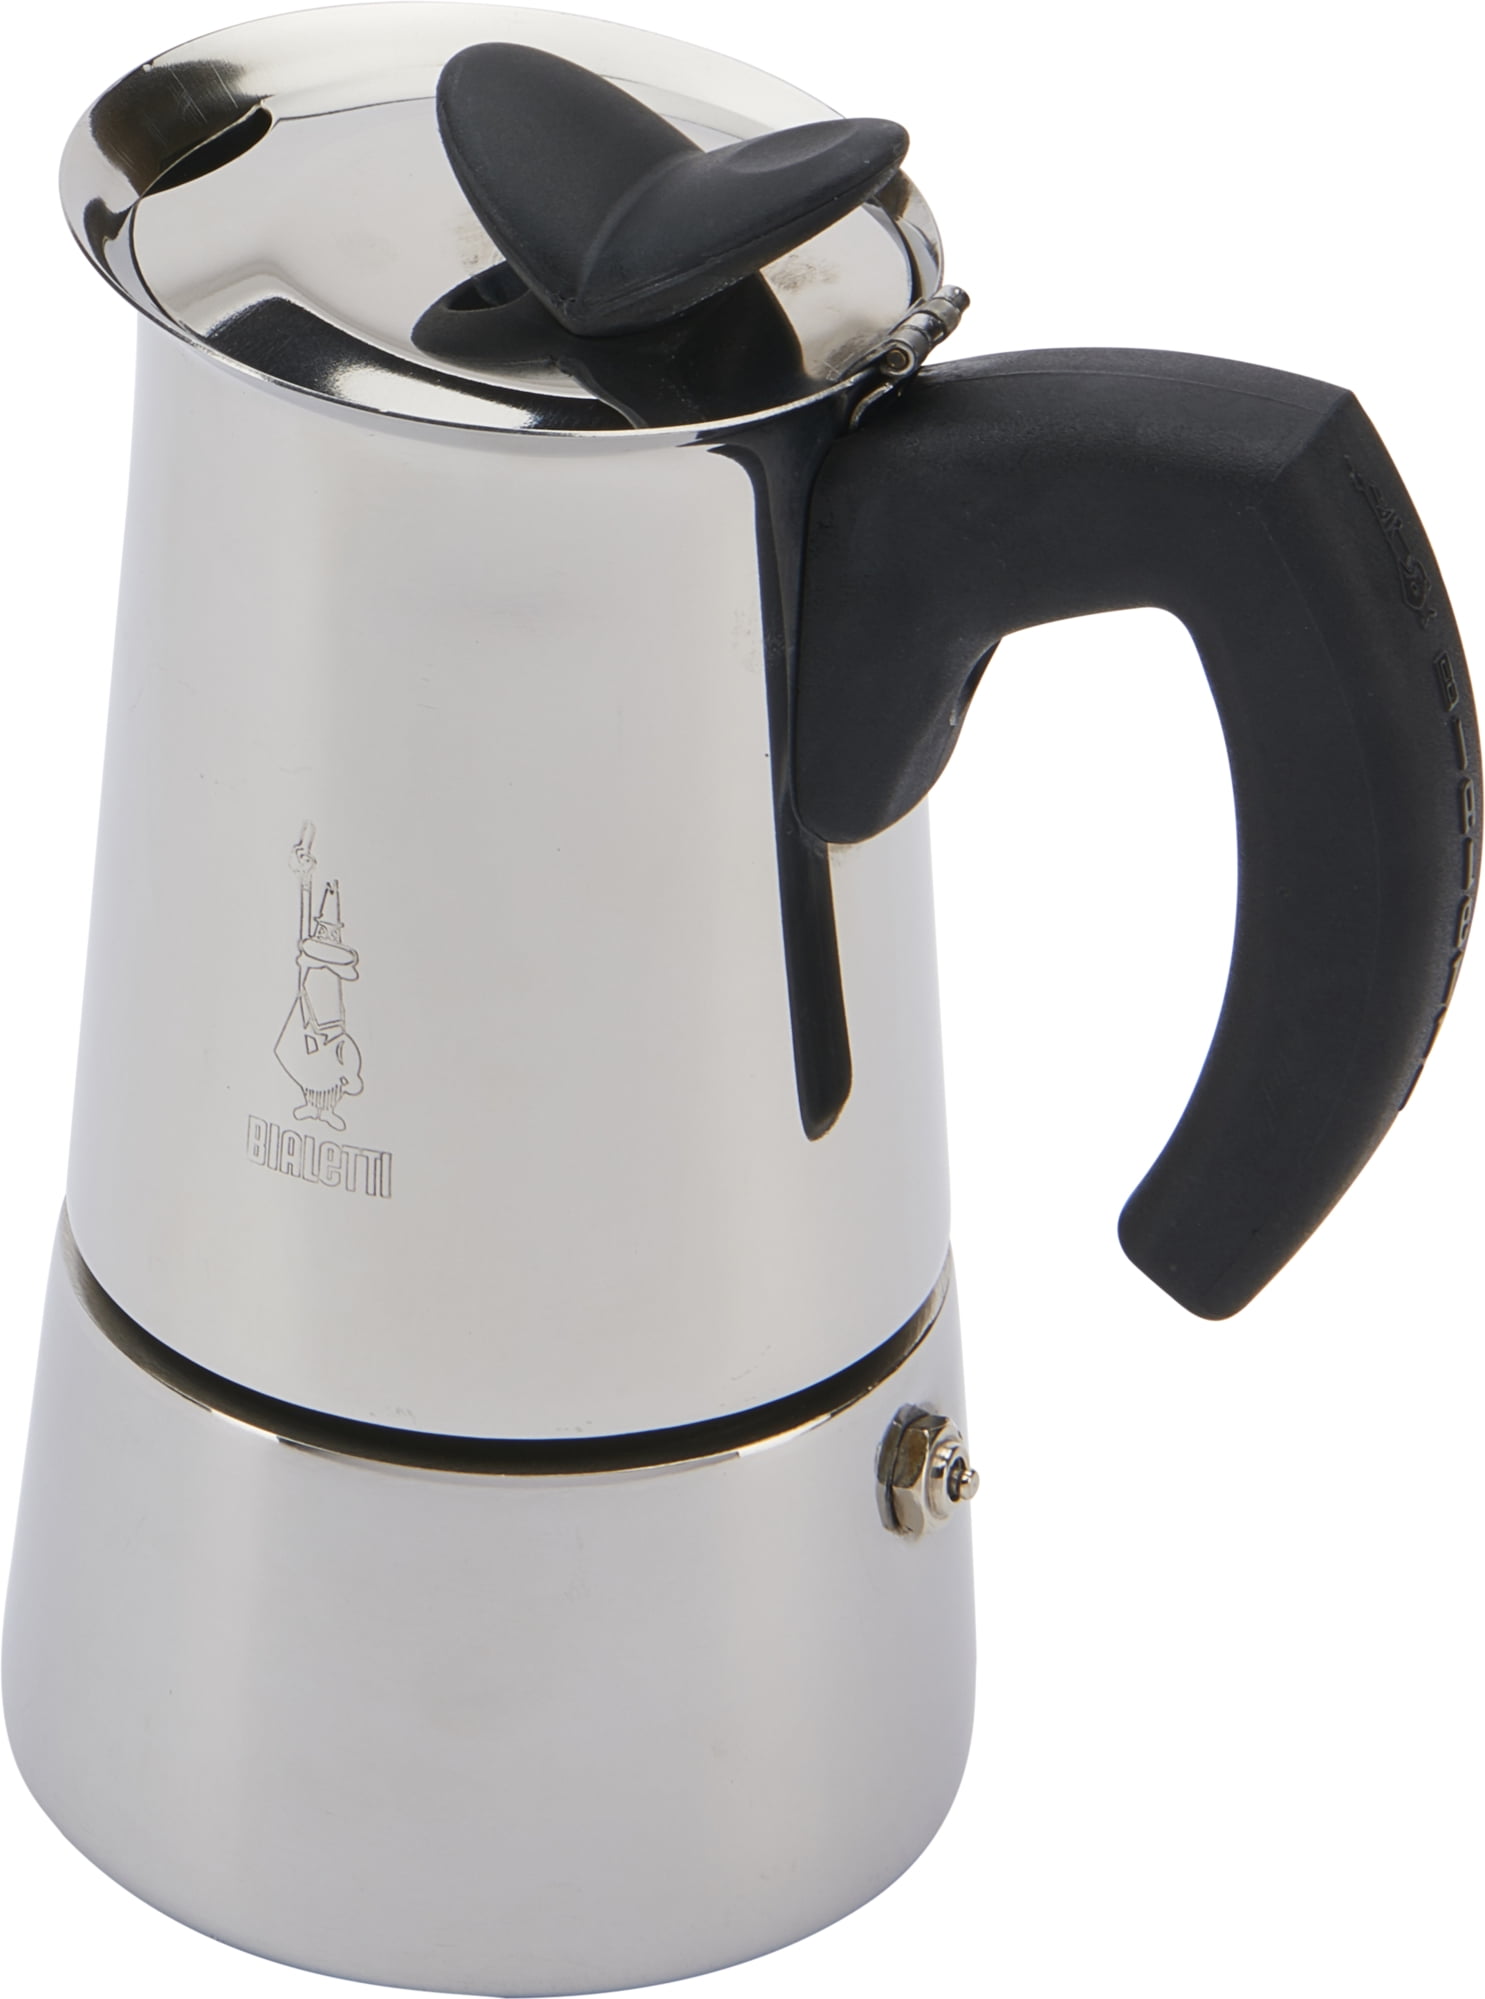 Hot Coffee Maker Stainless Steel Espresso Machine Cappuccino Moka Pot Bialetti